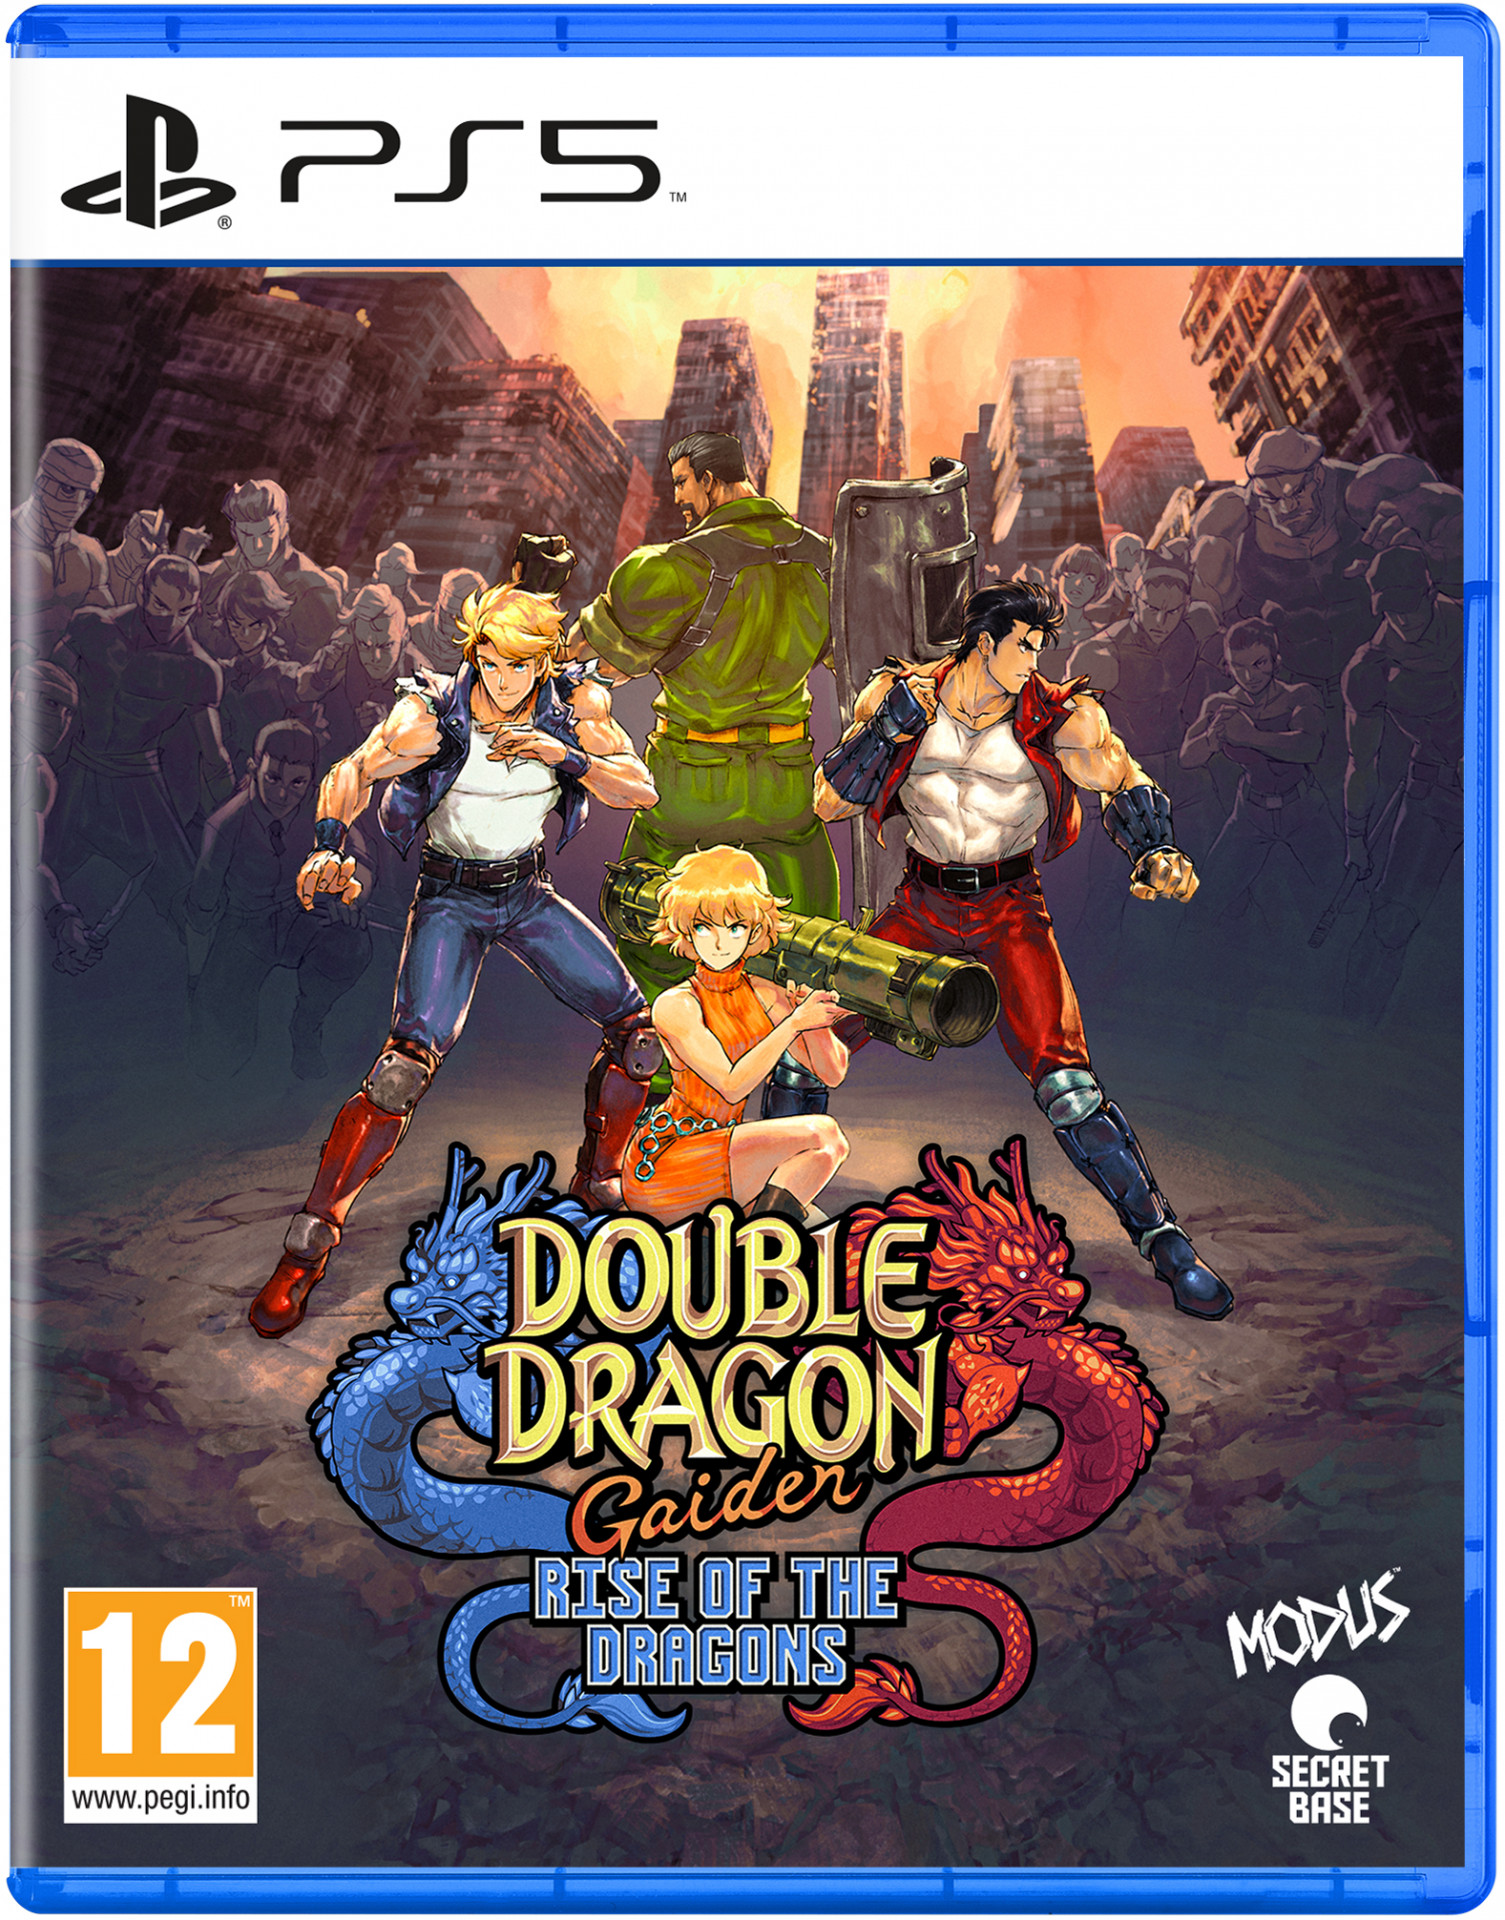 Double Dragon Gaiden: Rise of the Dragons (PS5), Modus, Secret Base